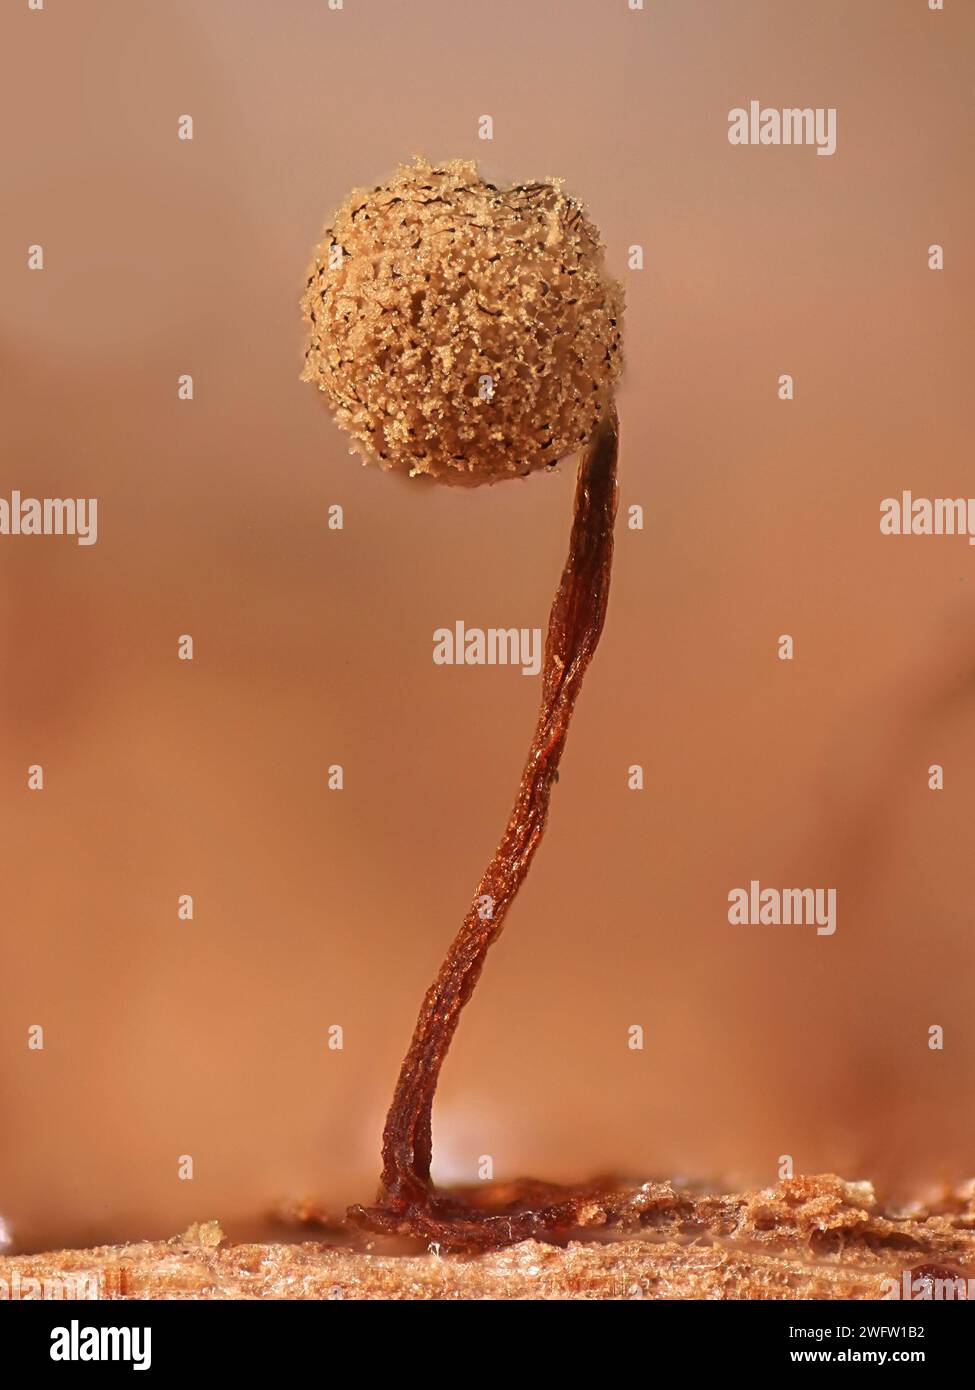 Cribraria intricata, une moisissure visqueuse, image microscopique de sporanges Banque D'Images